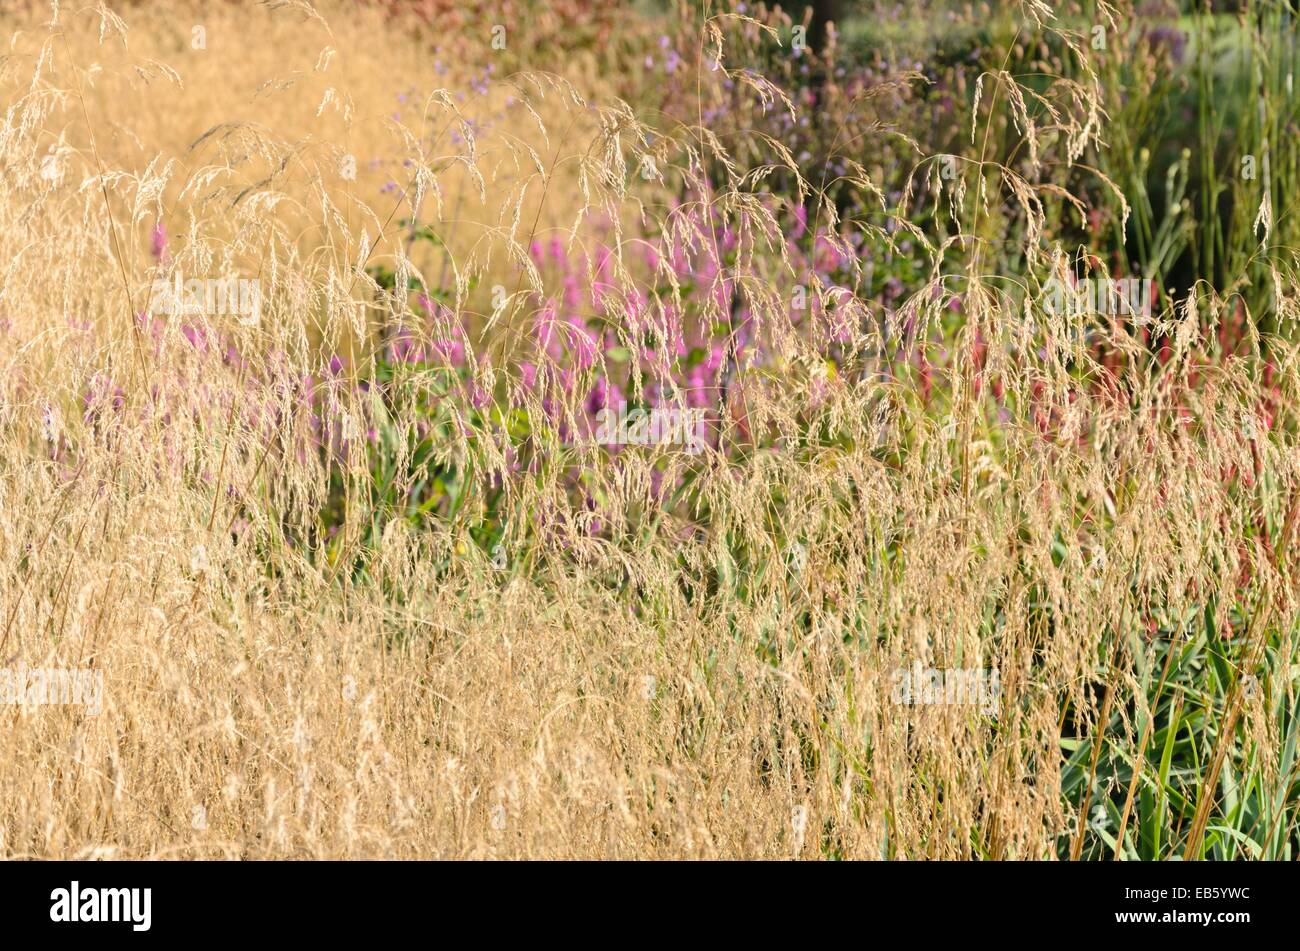 Tufted hair grass (Deschampsia cespitosa 'Tardiflora') Stock Photo